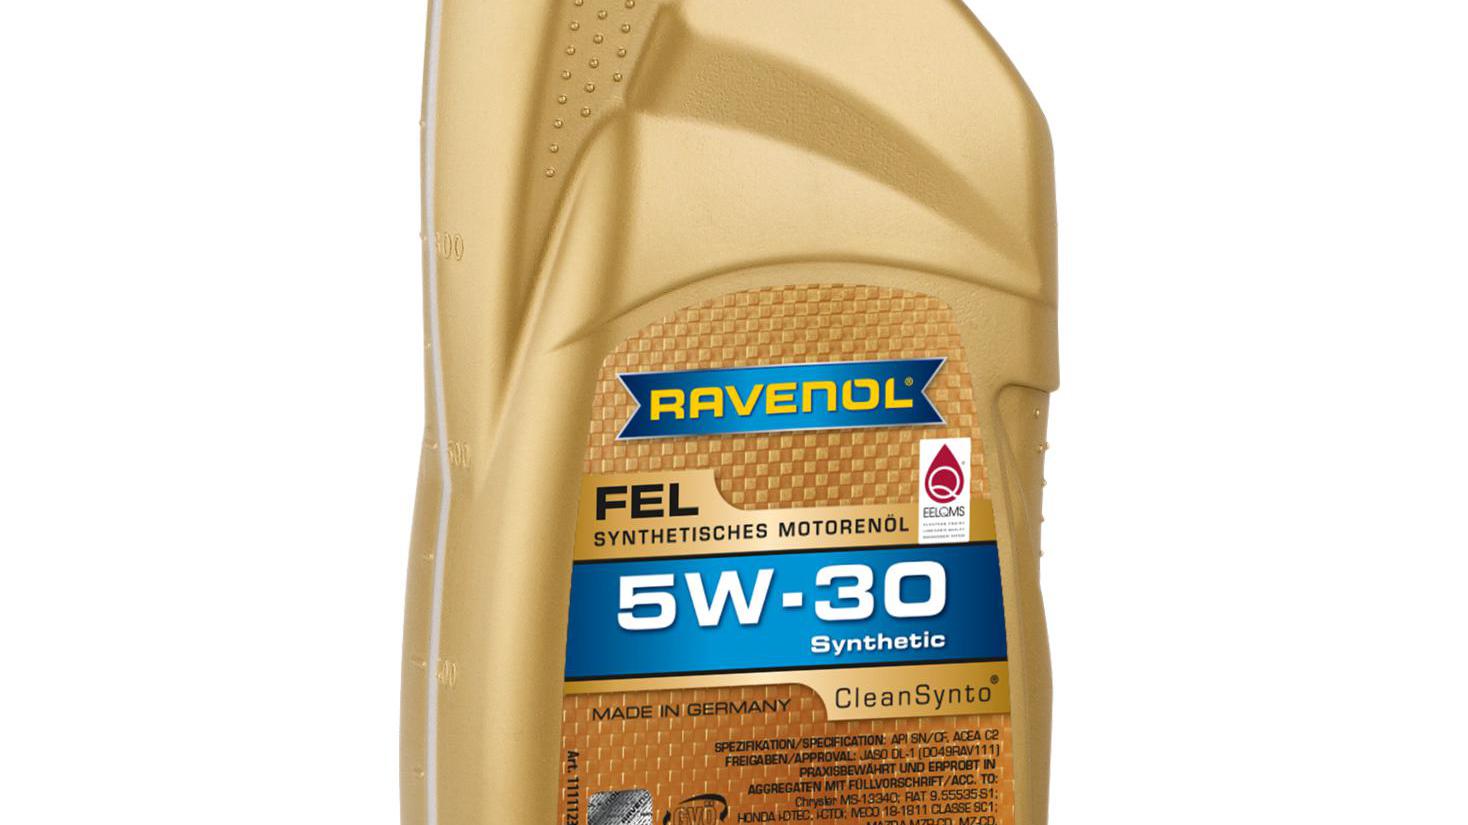 RAVENOL FDS SAE 5W-30 5 litros